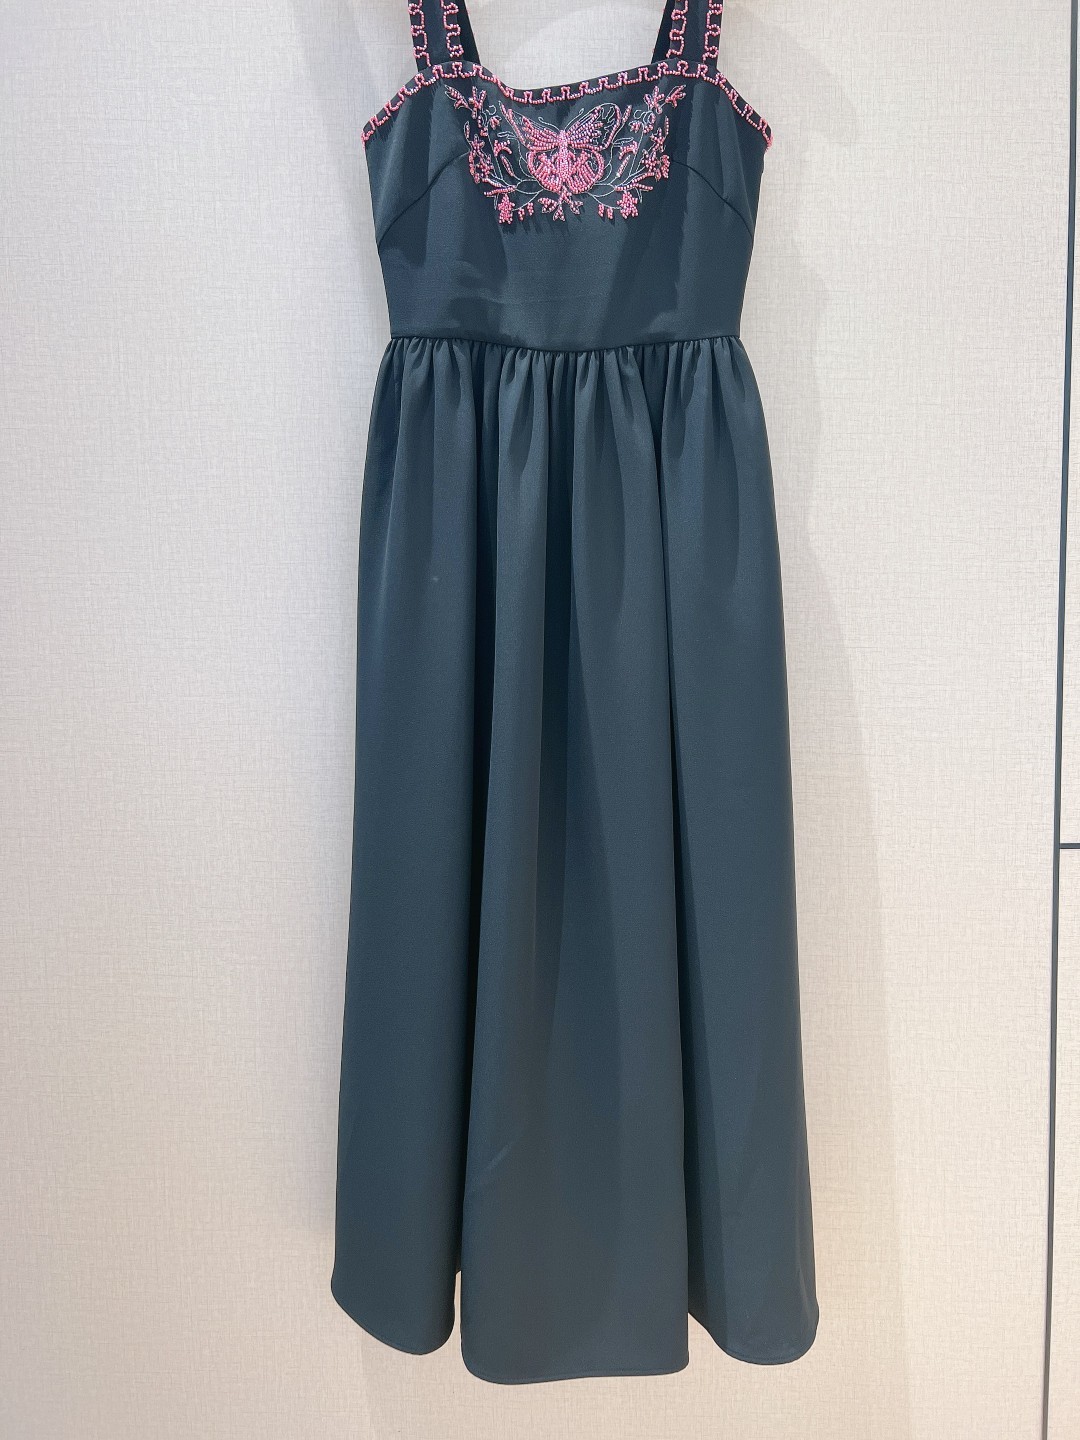 Dio*r蝴蝶钉珠吊带裙new2024早春系列的设计里蝴蝶元素贯穿始终并糅合了墨西哥当地的经典元素与服饰